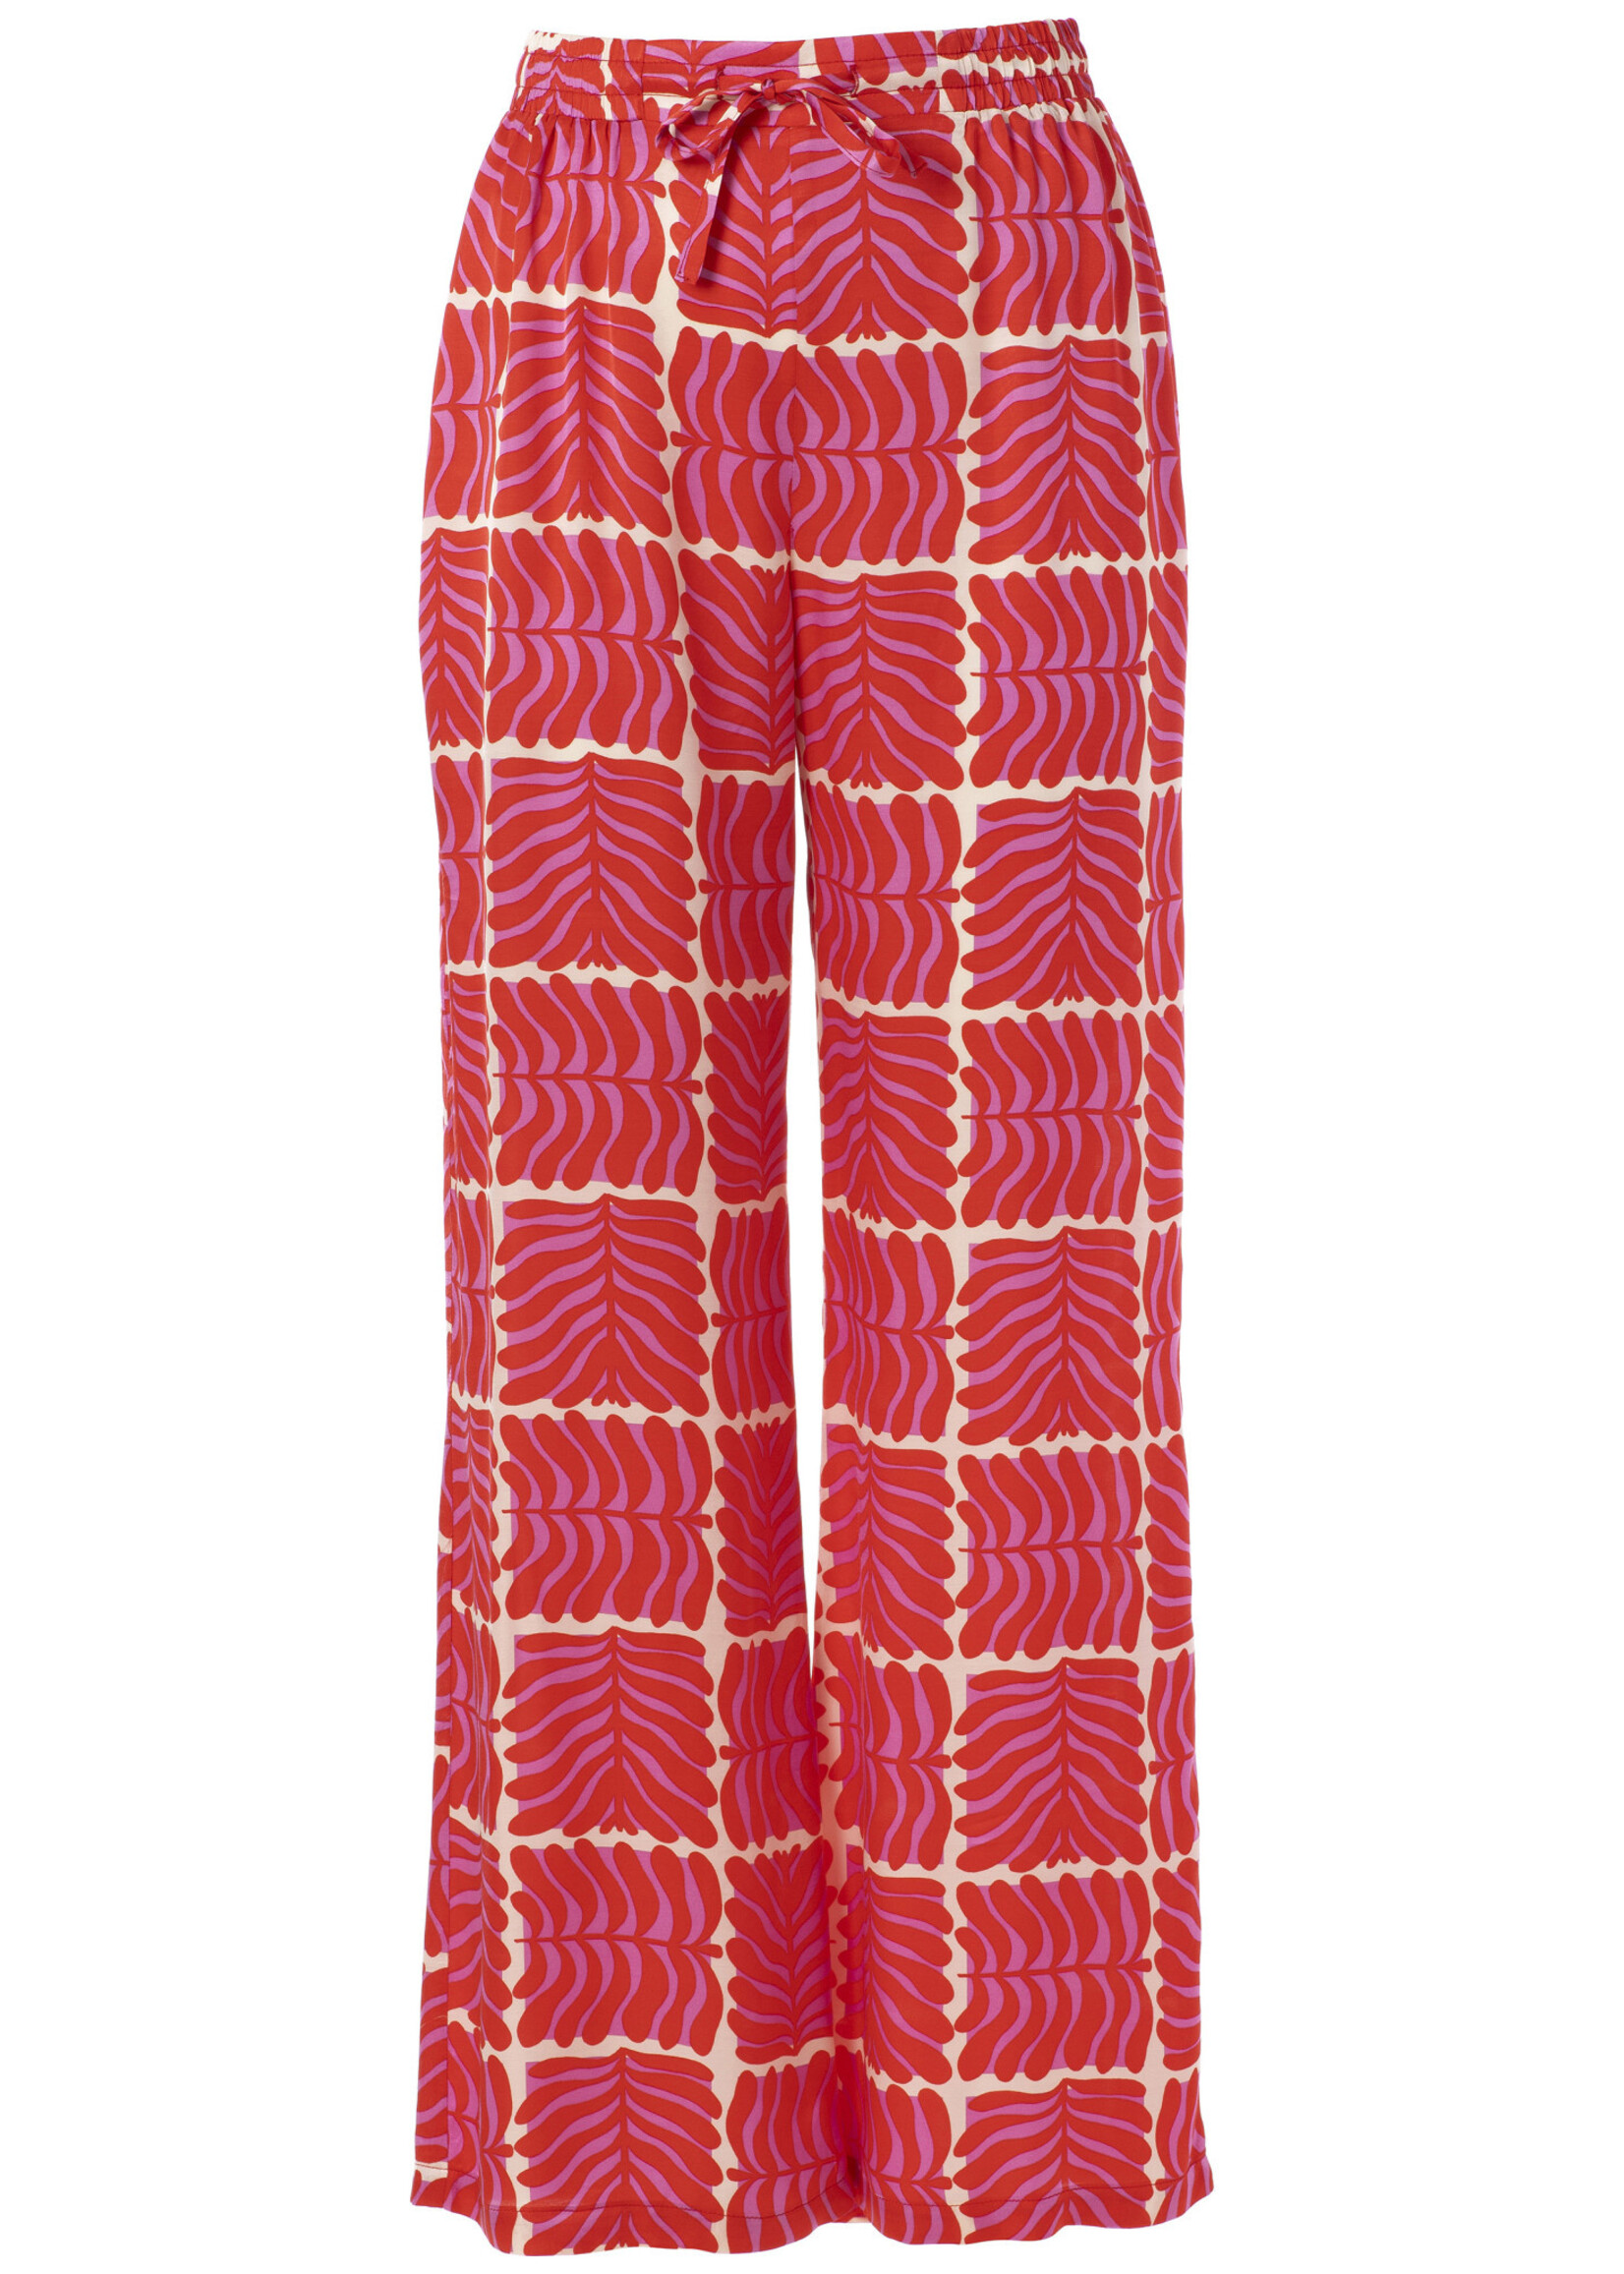 JC Sophie JC Sophie, Dali trousers, Red palm leaf, Size: